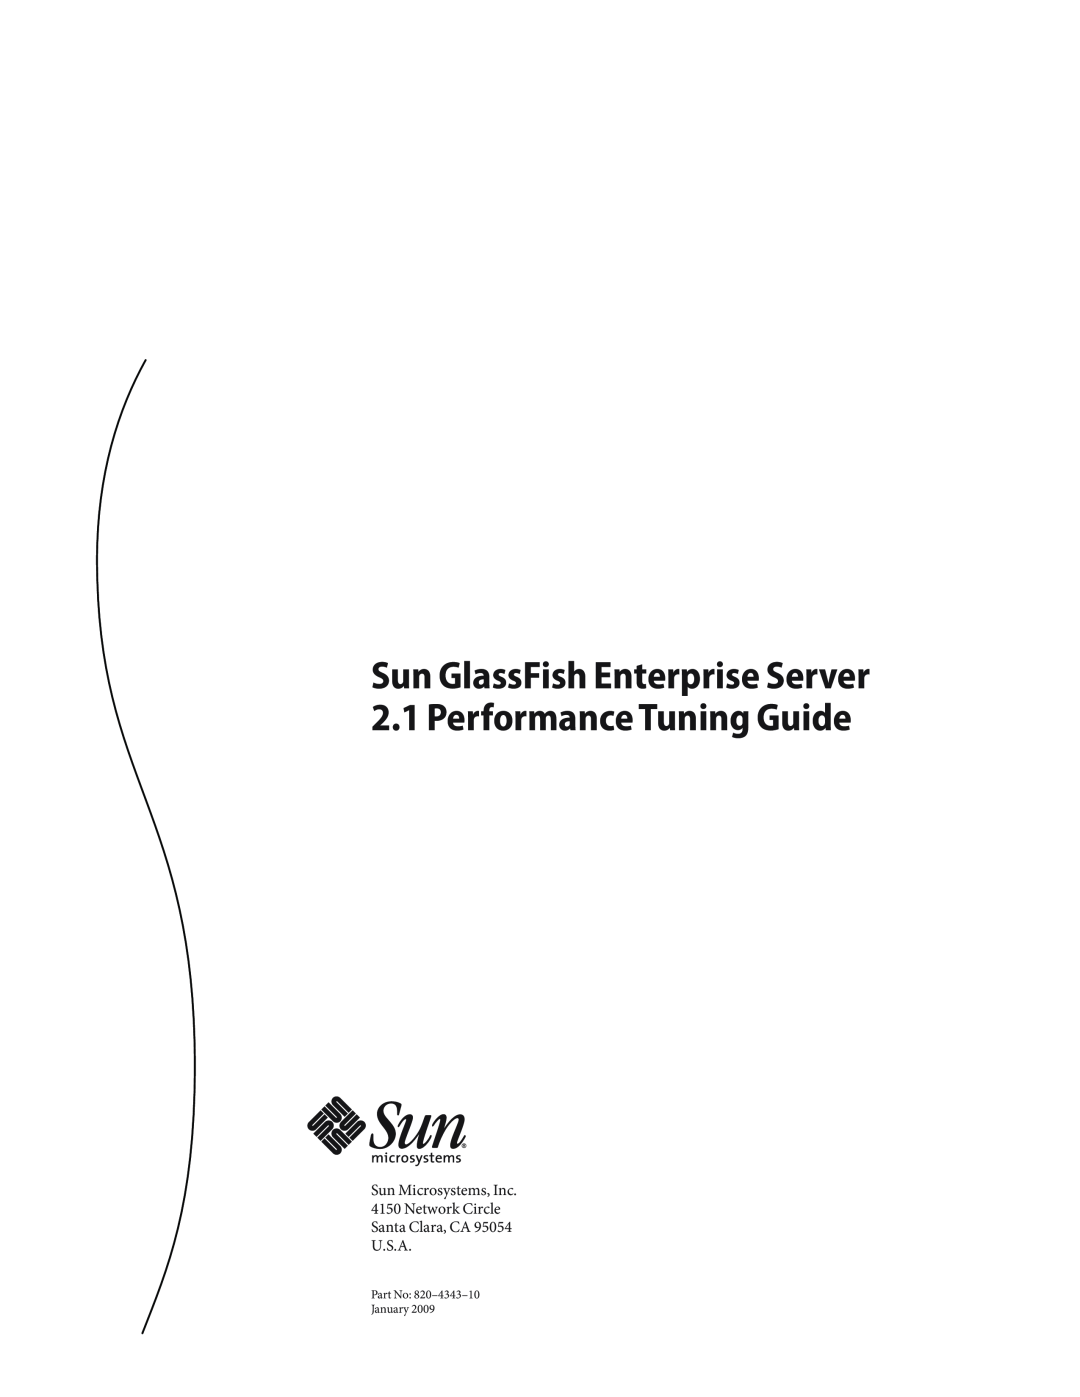 Sun Microsystems 820434310 manual Sun GlassFish Enterprise Server 2.1 Performance Tuning Guide 